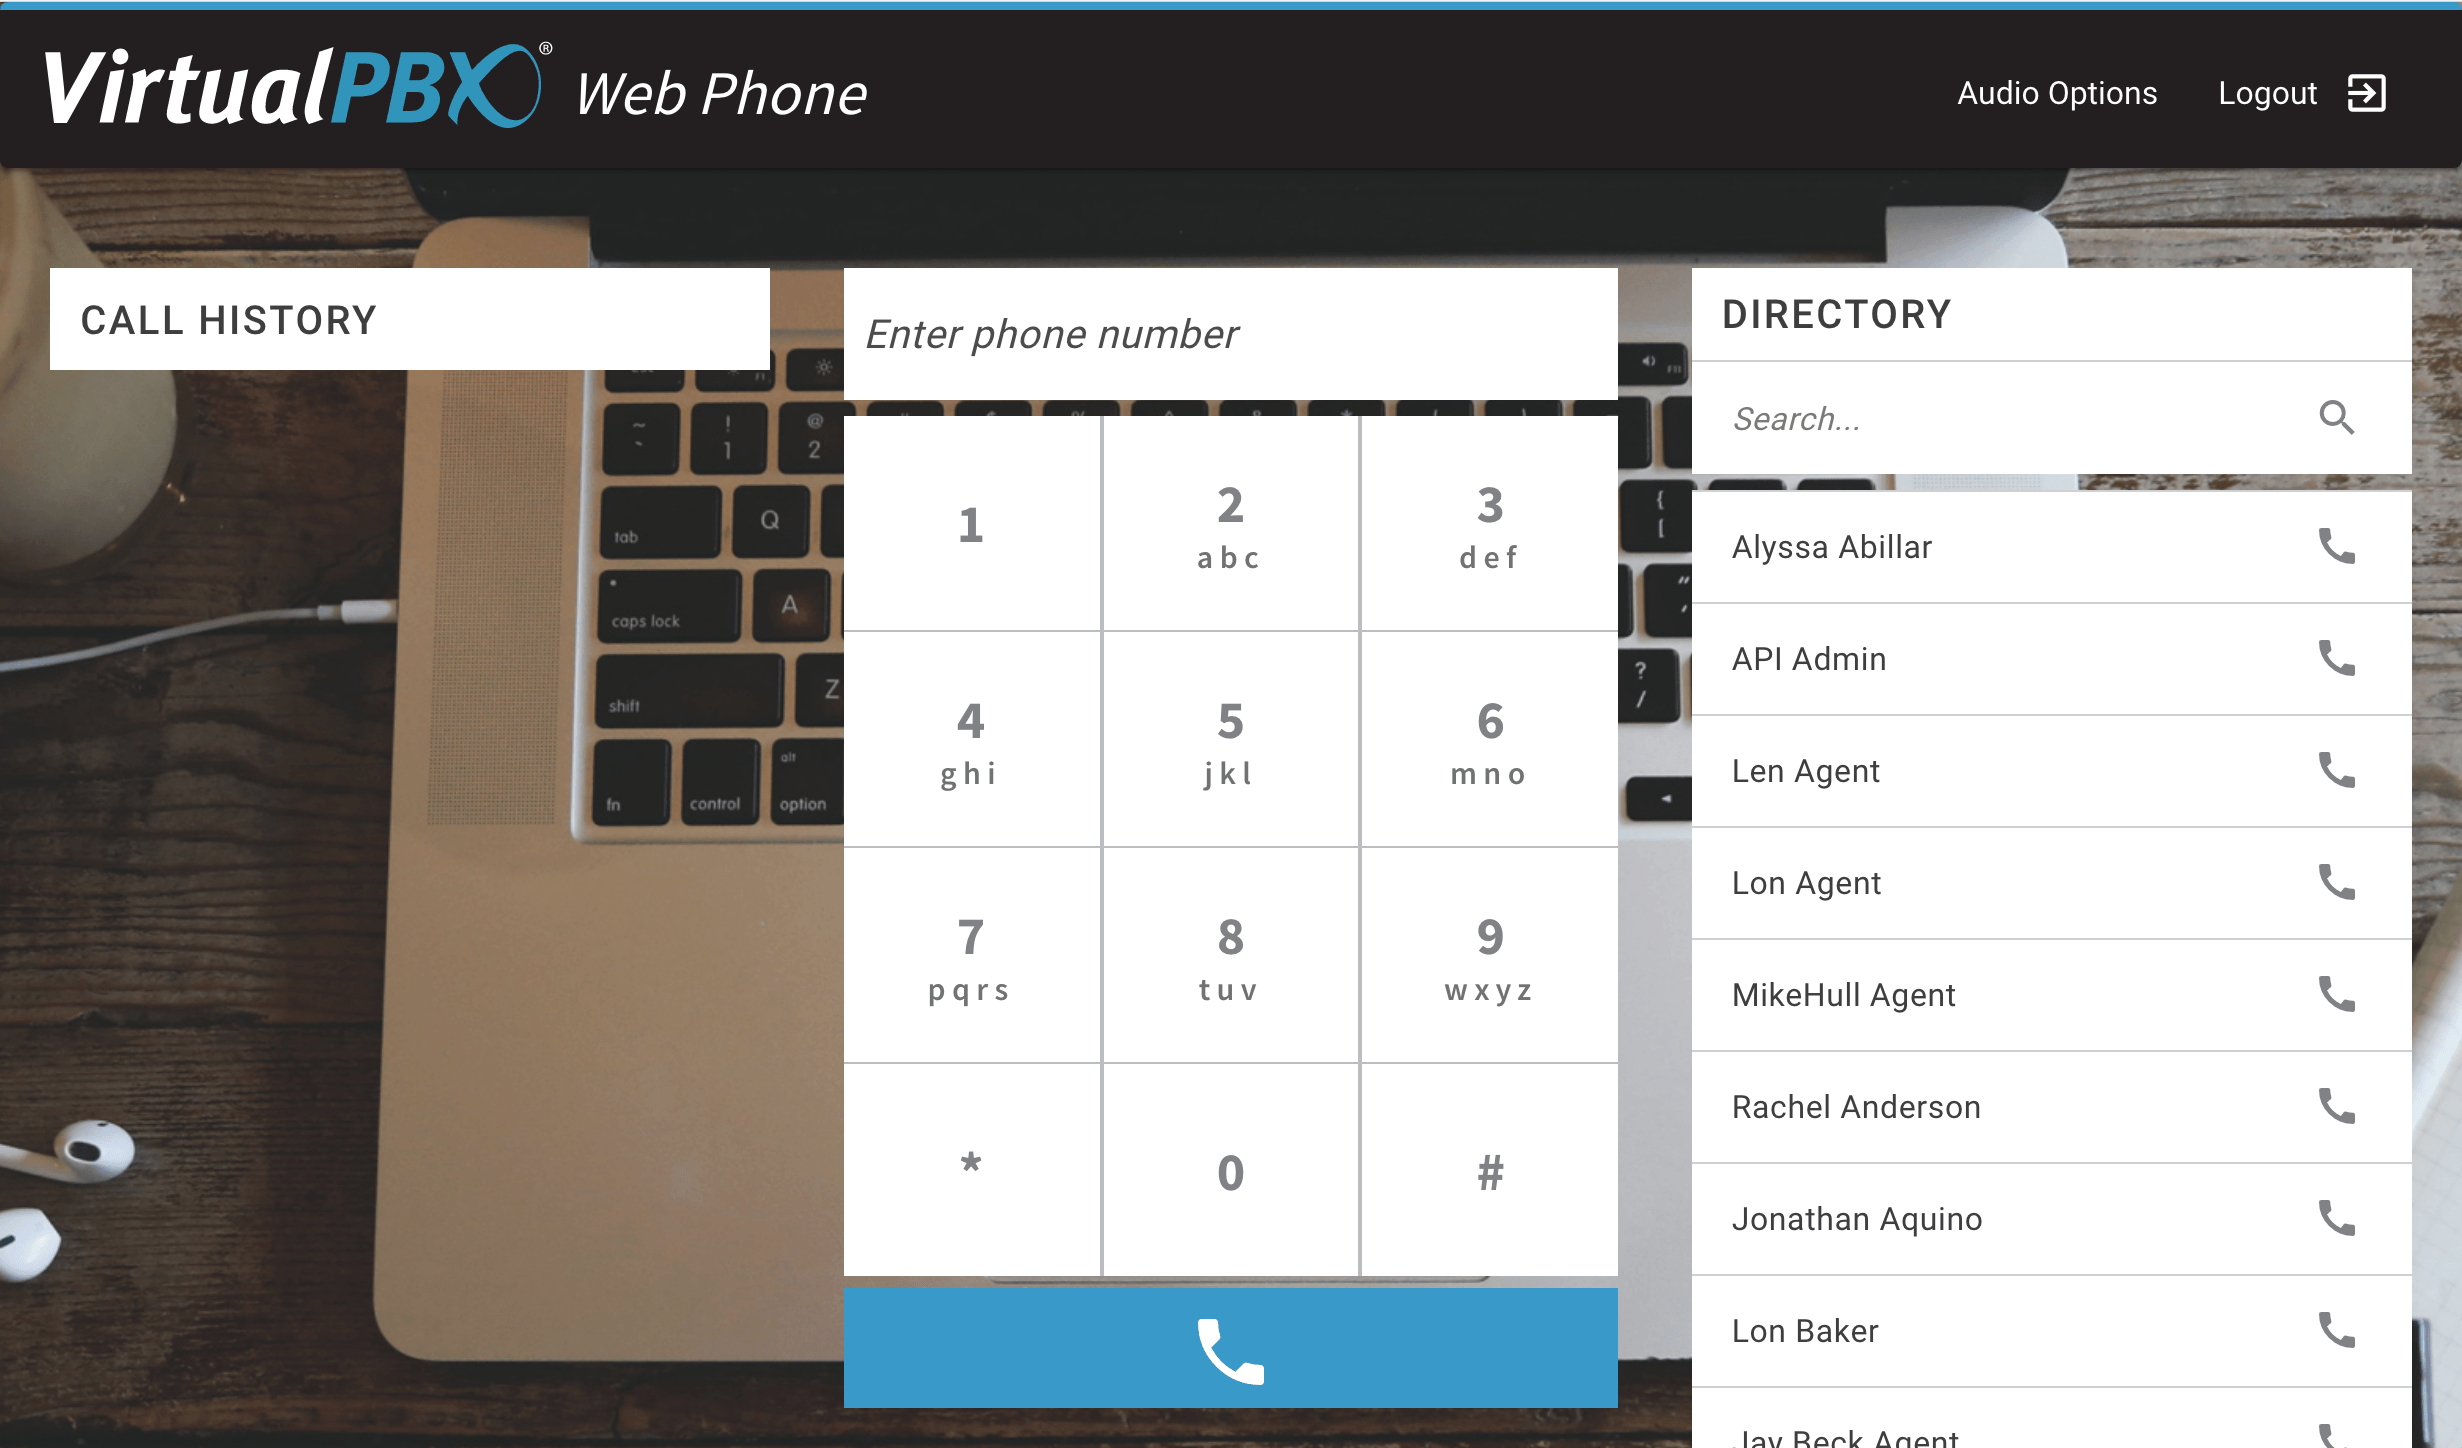 Make phone calls online with the VirtualPBX Web Phone